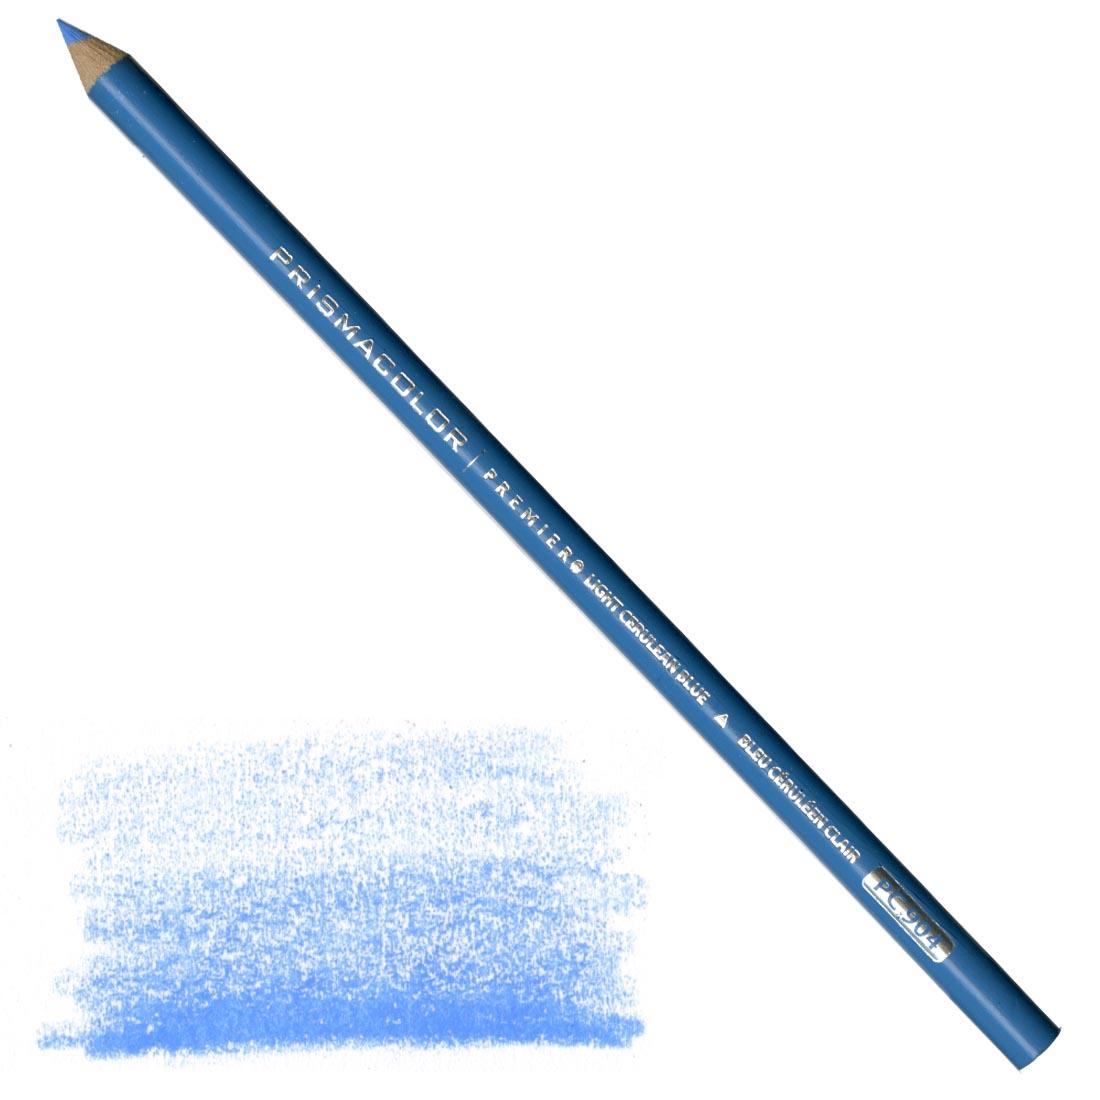 Light Cerulean Blue Prismacolor Premier Colored Pencil with a sample colored swatch